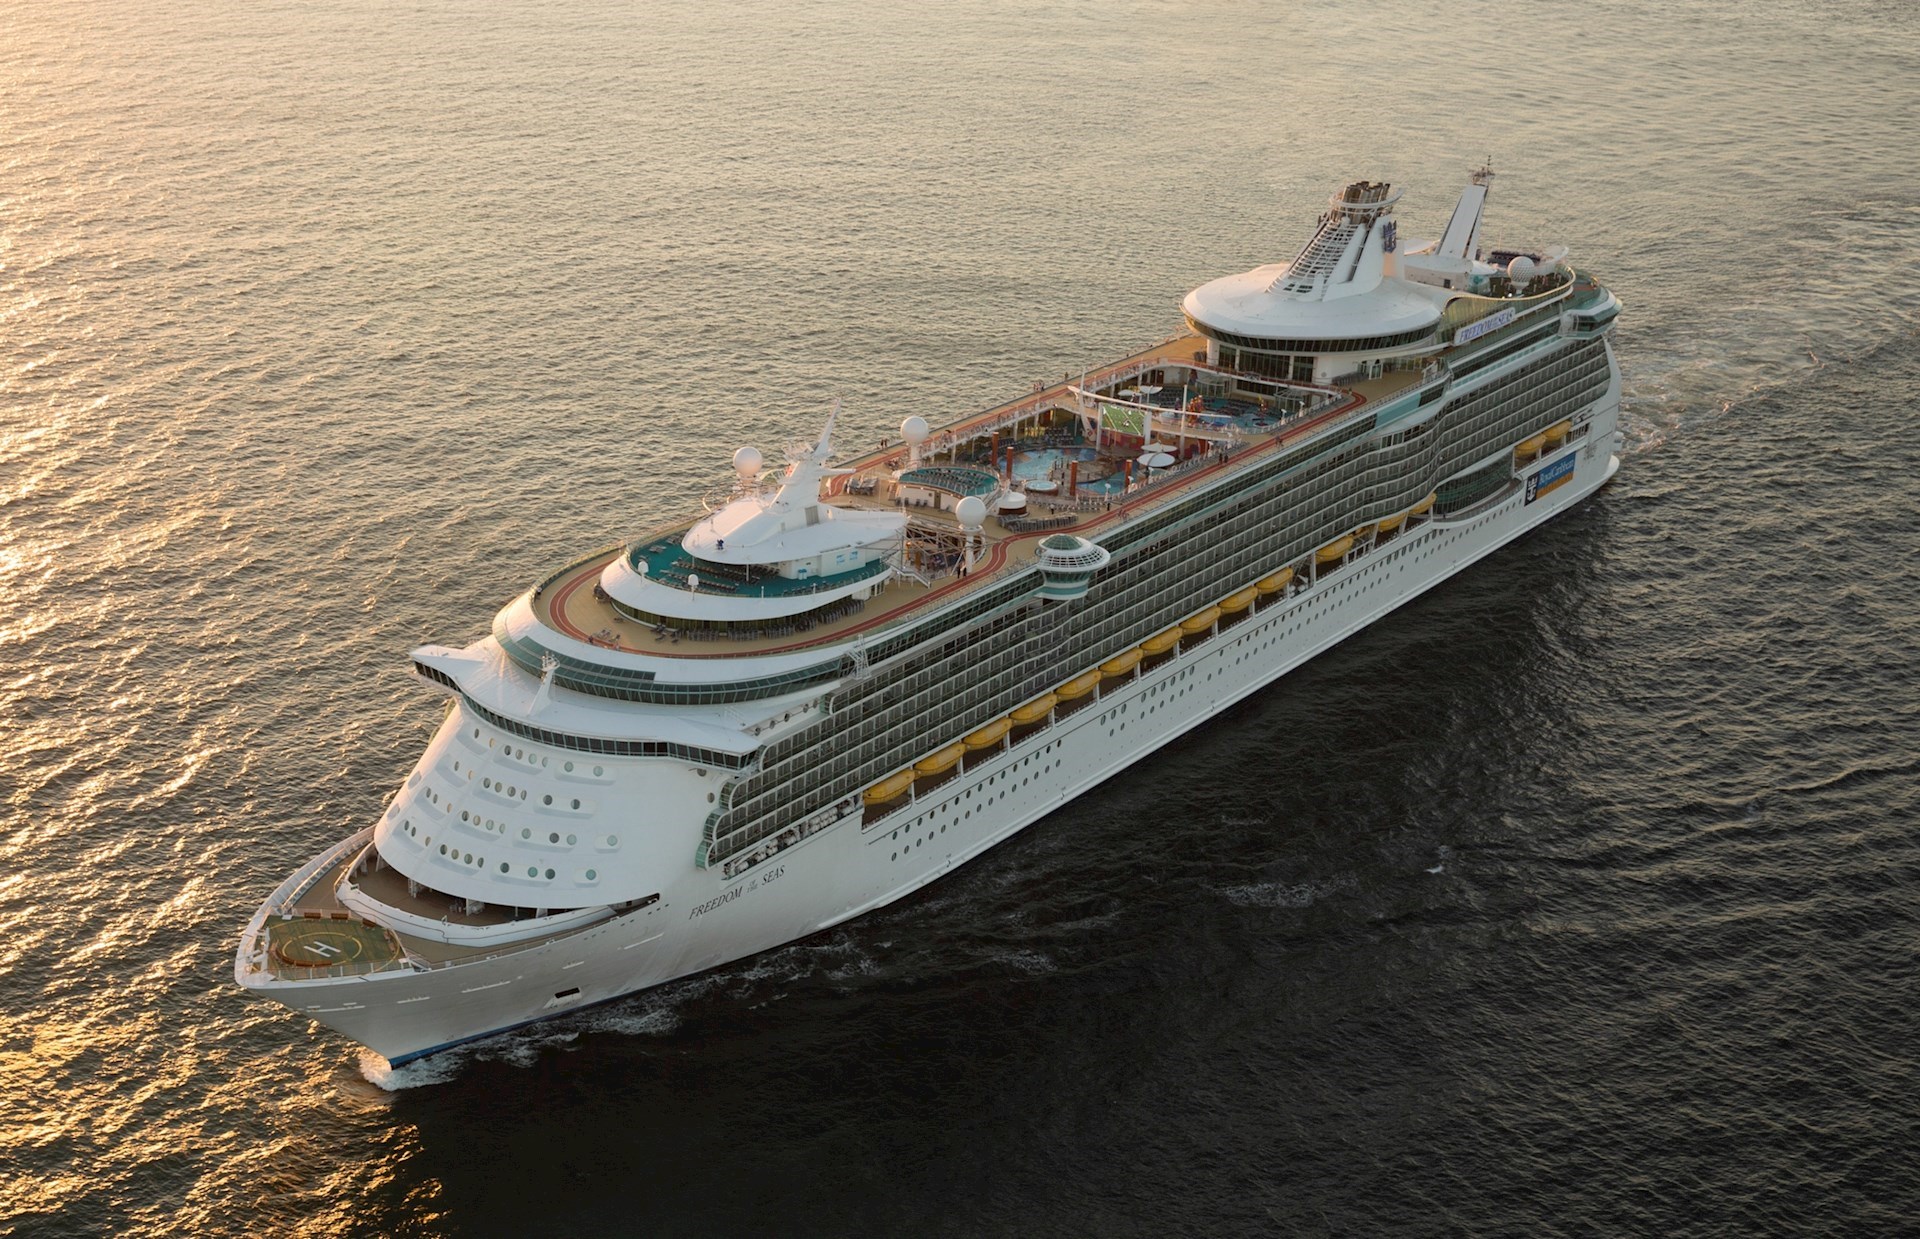 Royal Caribbean Freedom of the Seas Cruise Ship 2021 / 2022